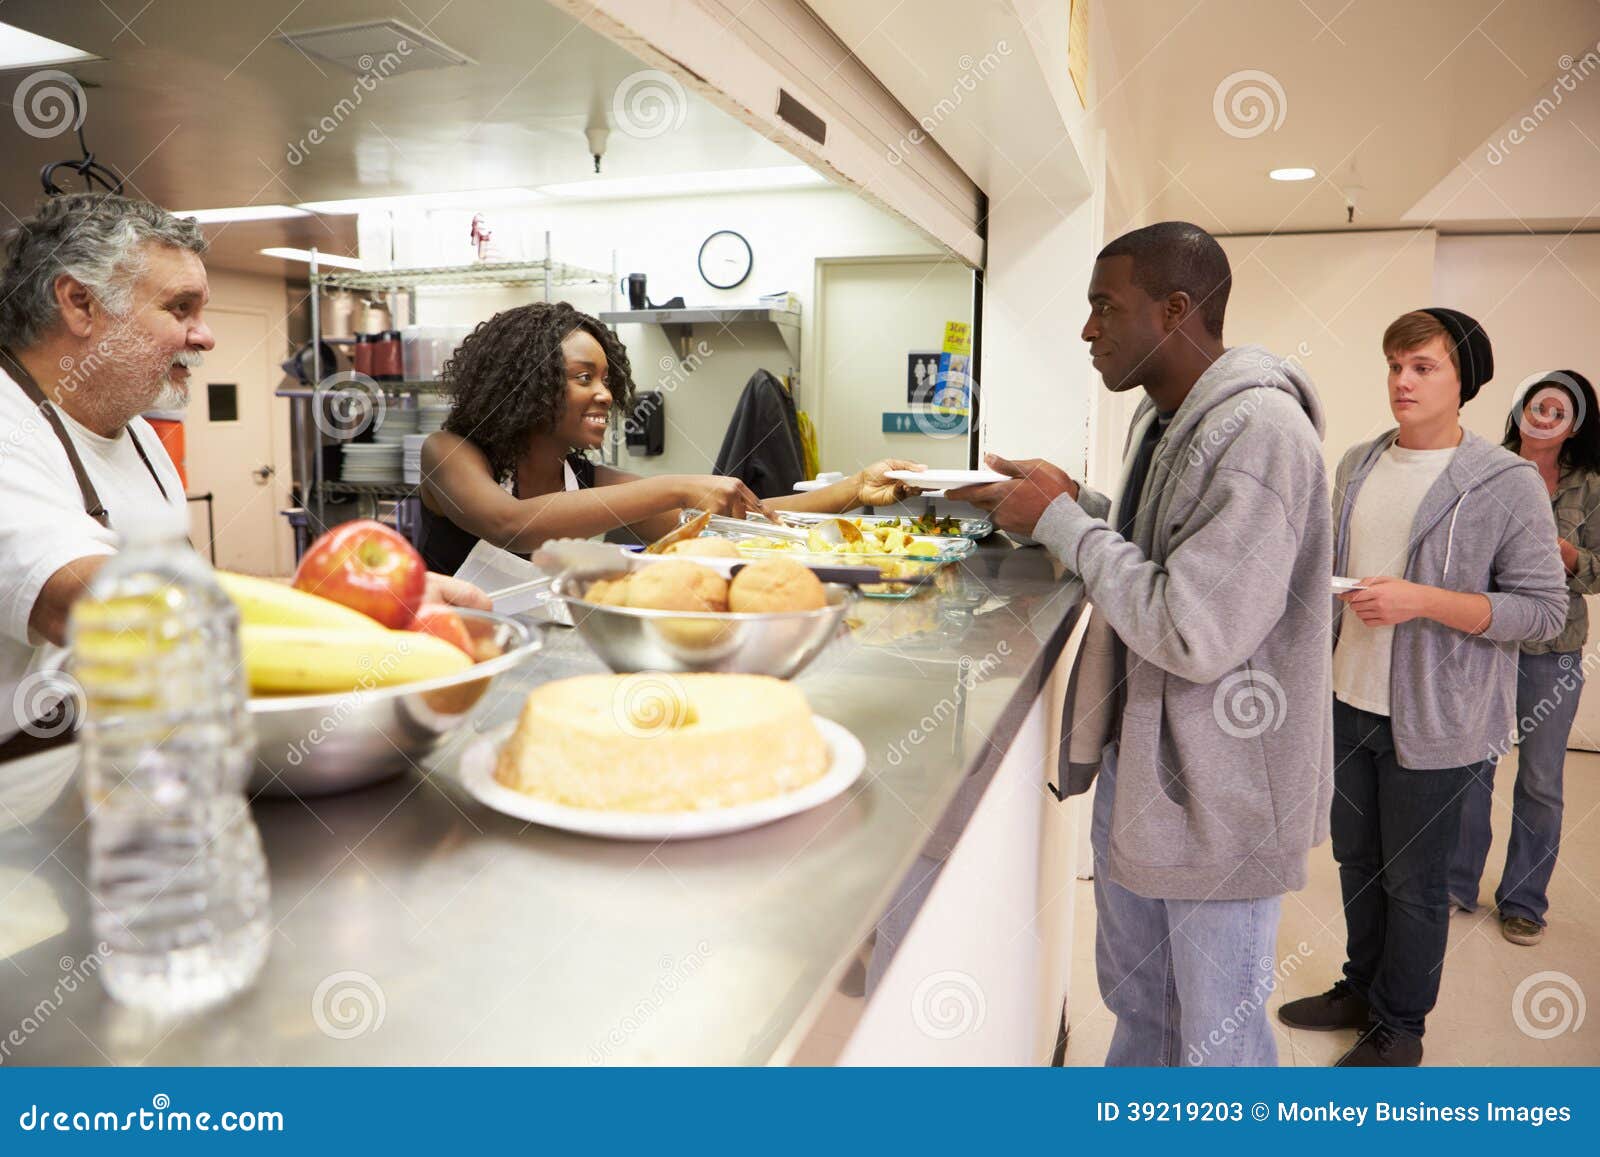 kitchen serving food in homeless shelter